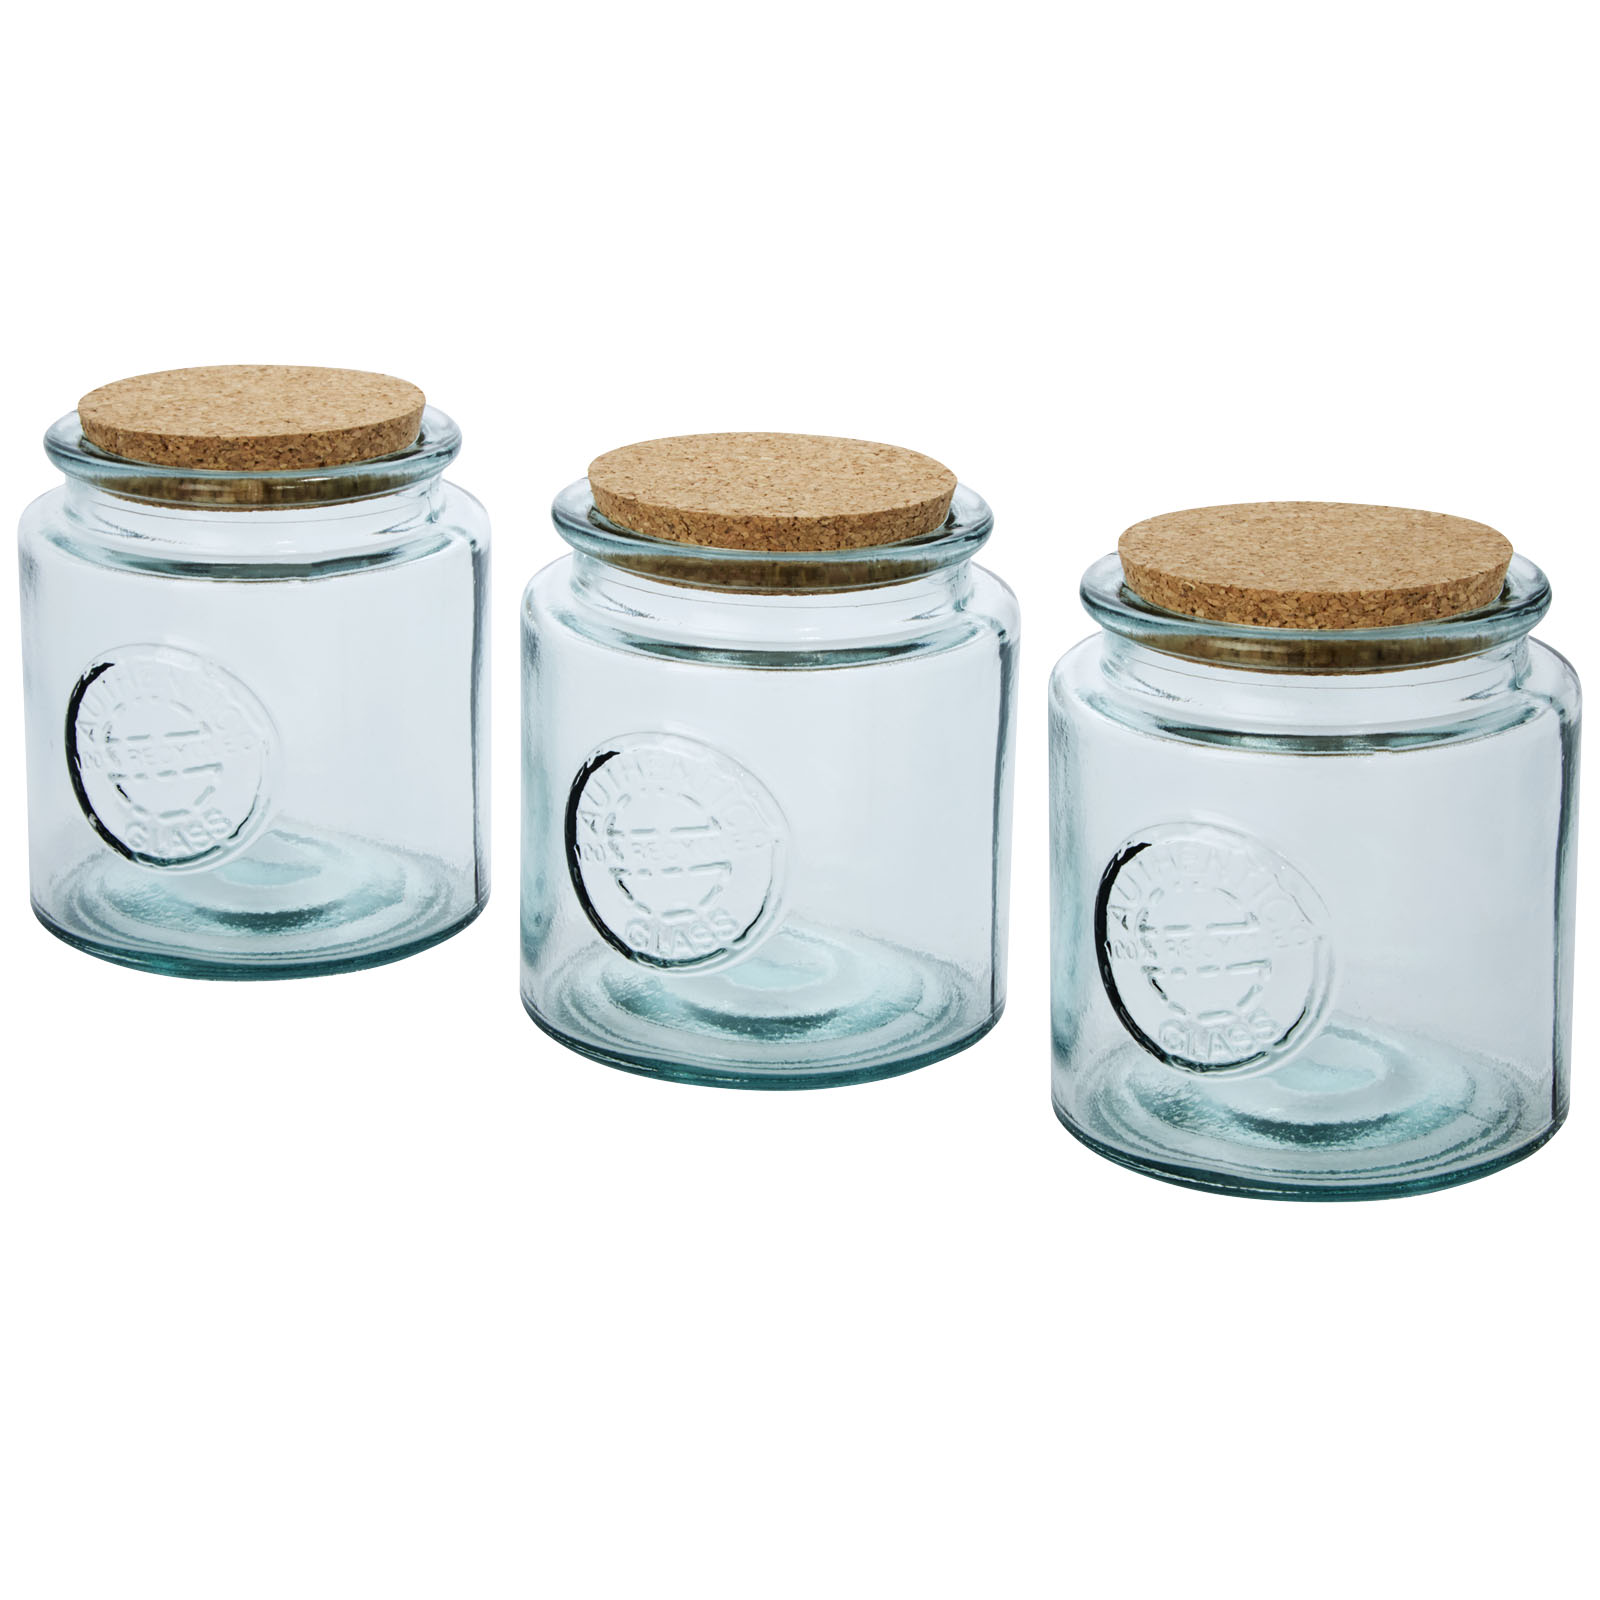 3-Piece Recycled Glass Jar Set - Hitchin